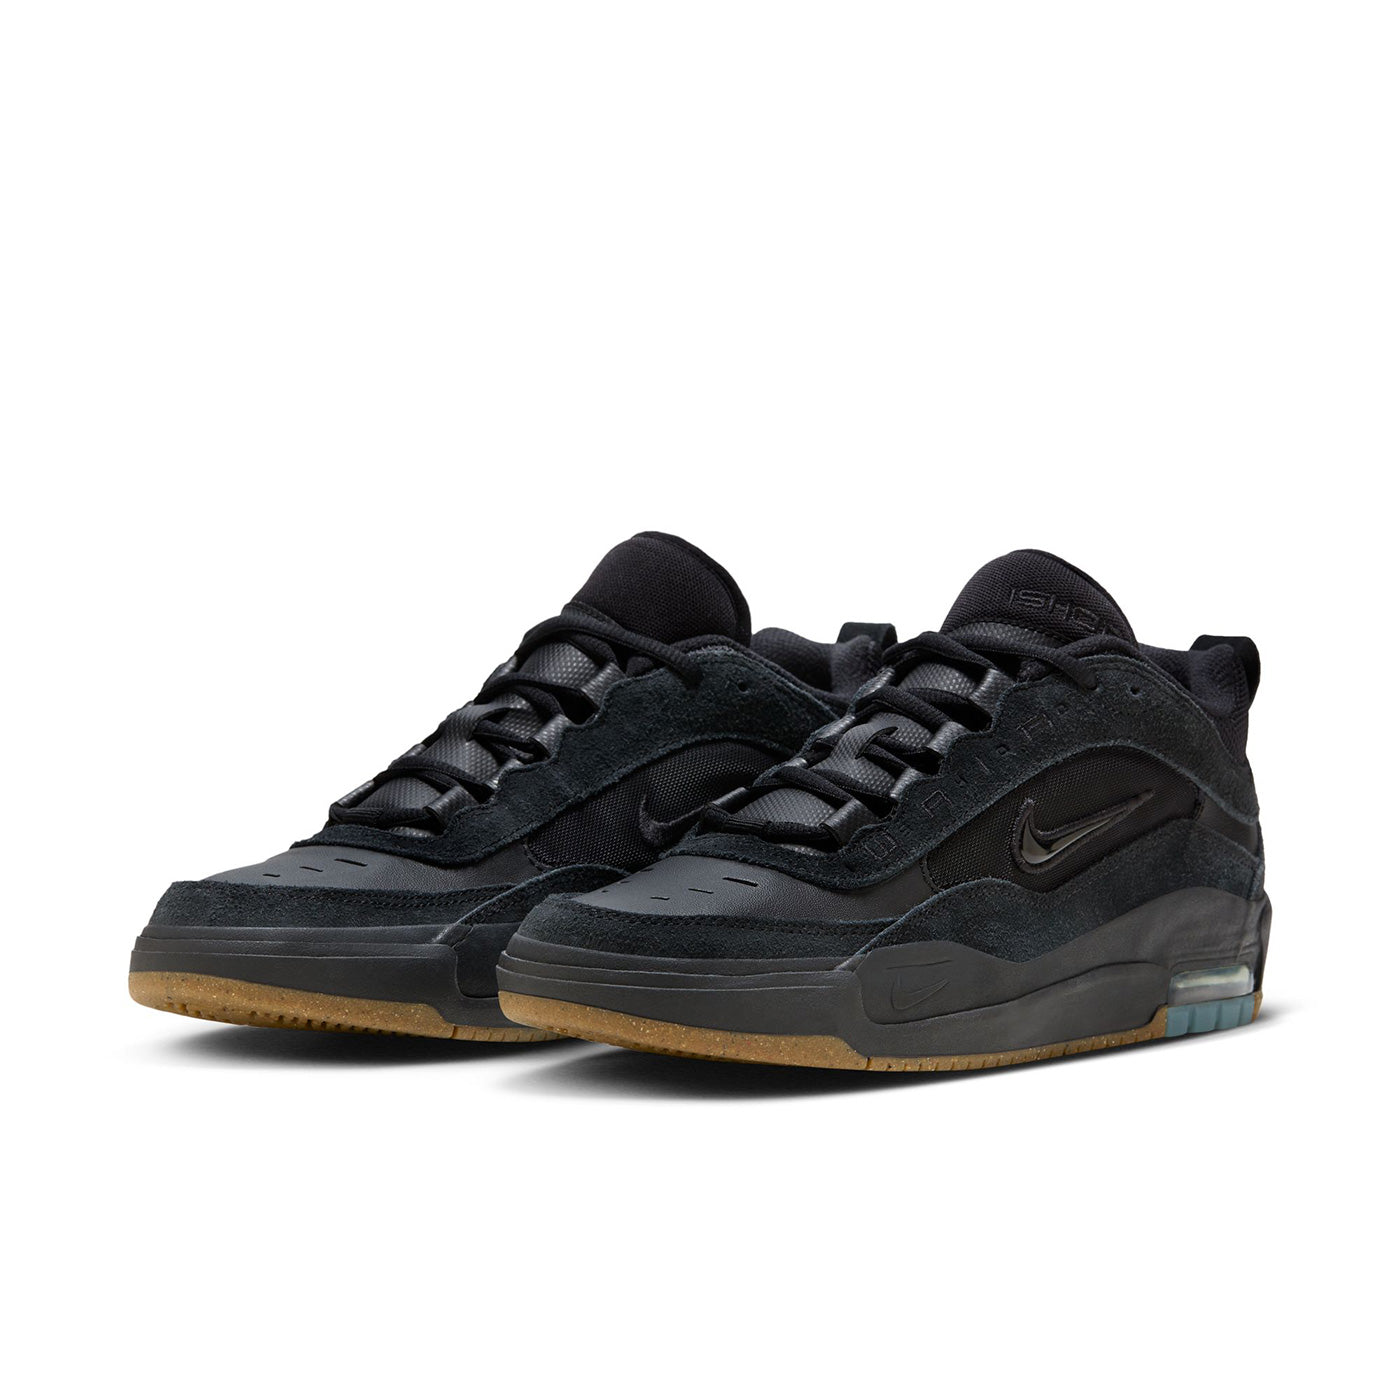 Nike Air Max Ishod Shoe - Black/Anthracite-Black